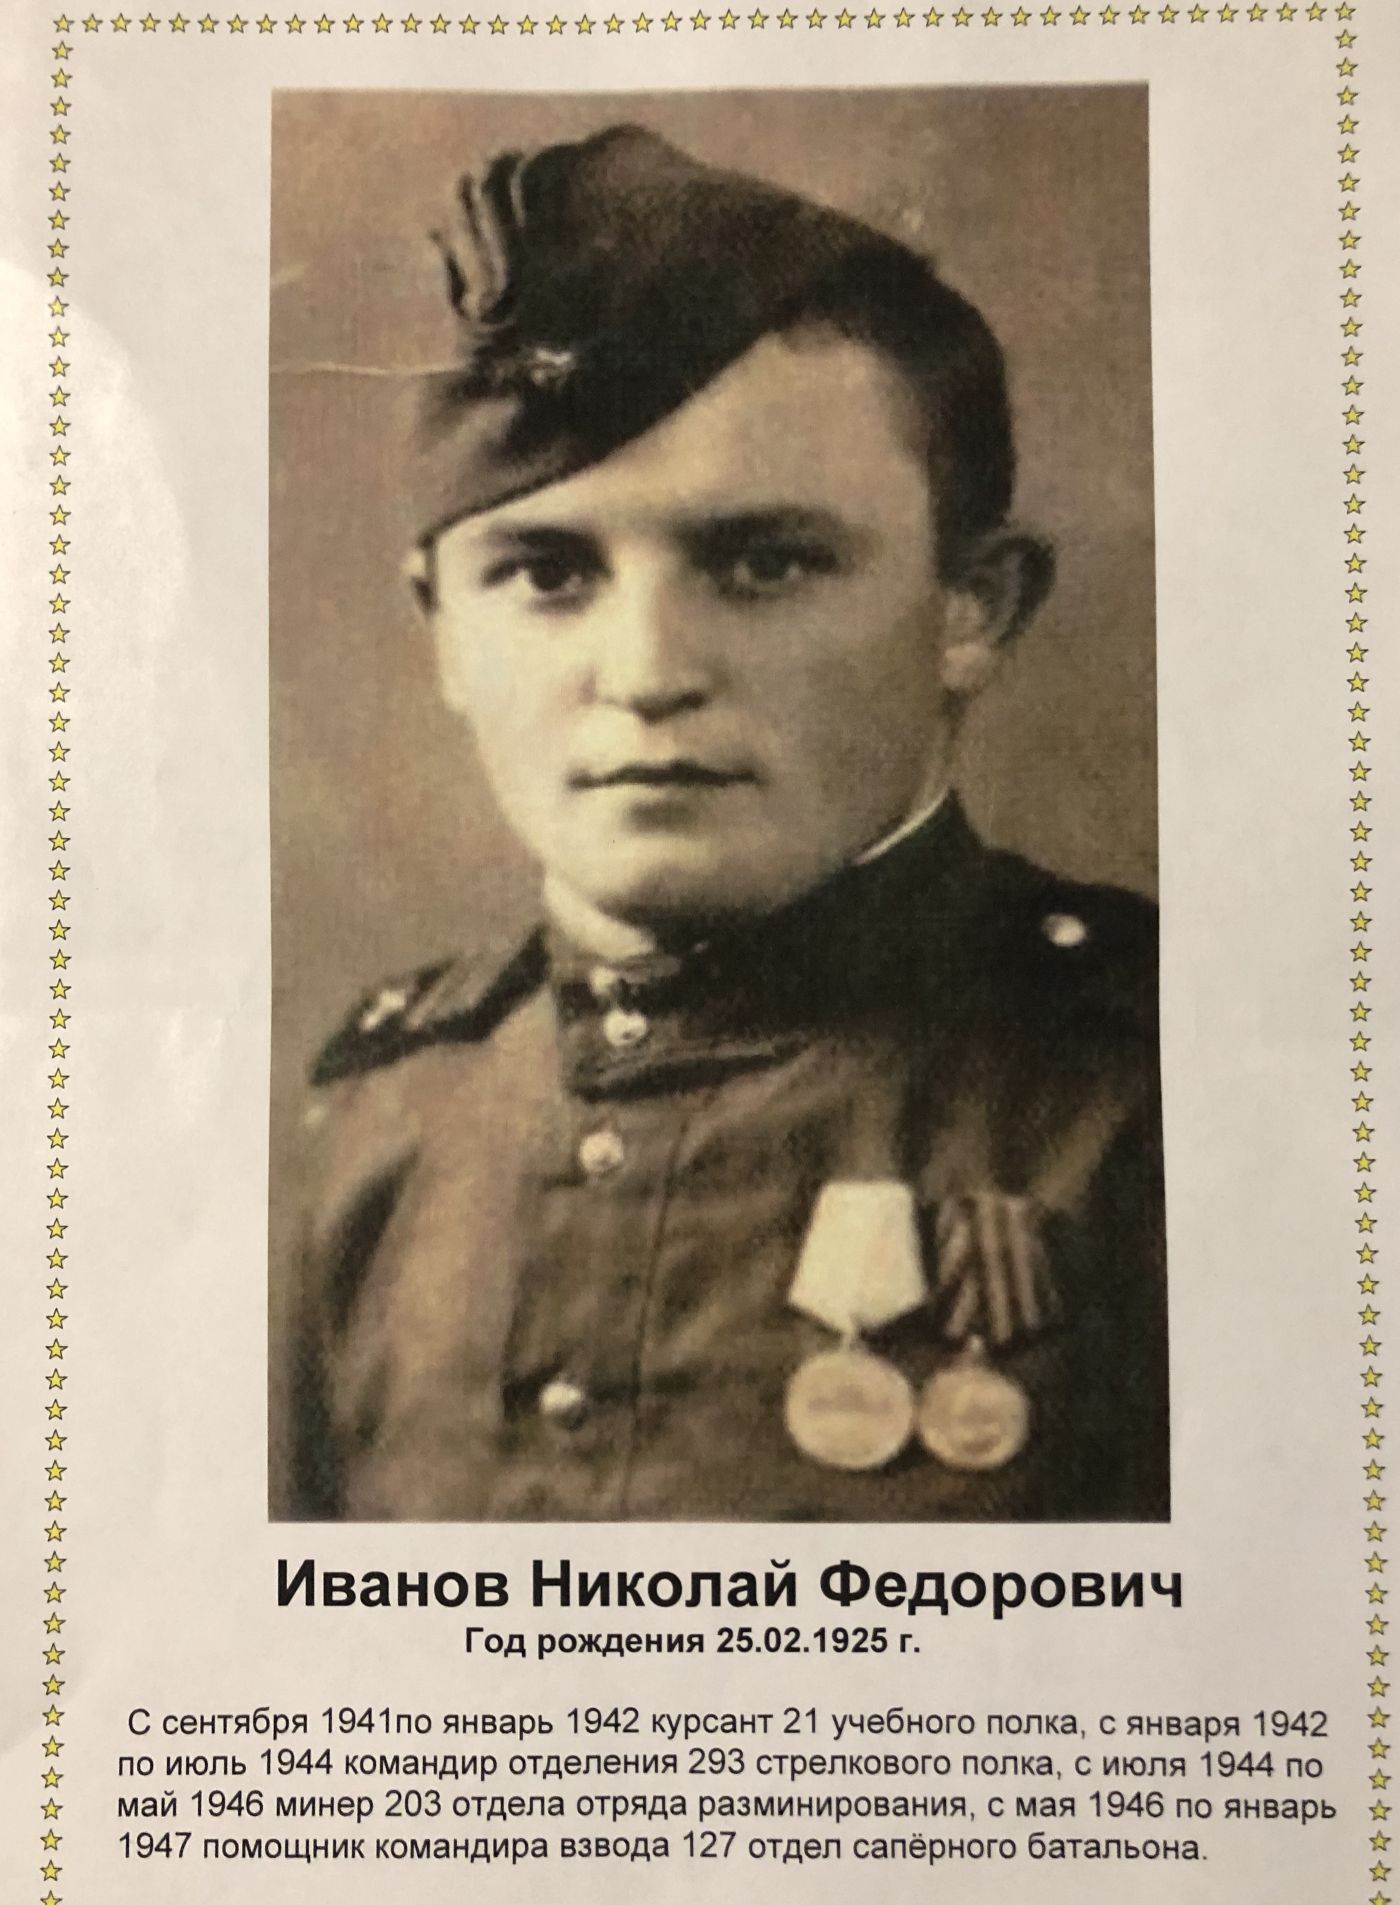 Иванов Николай Фёдорович